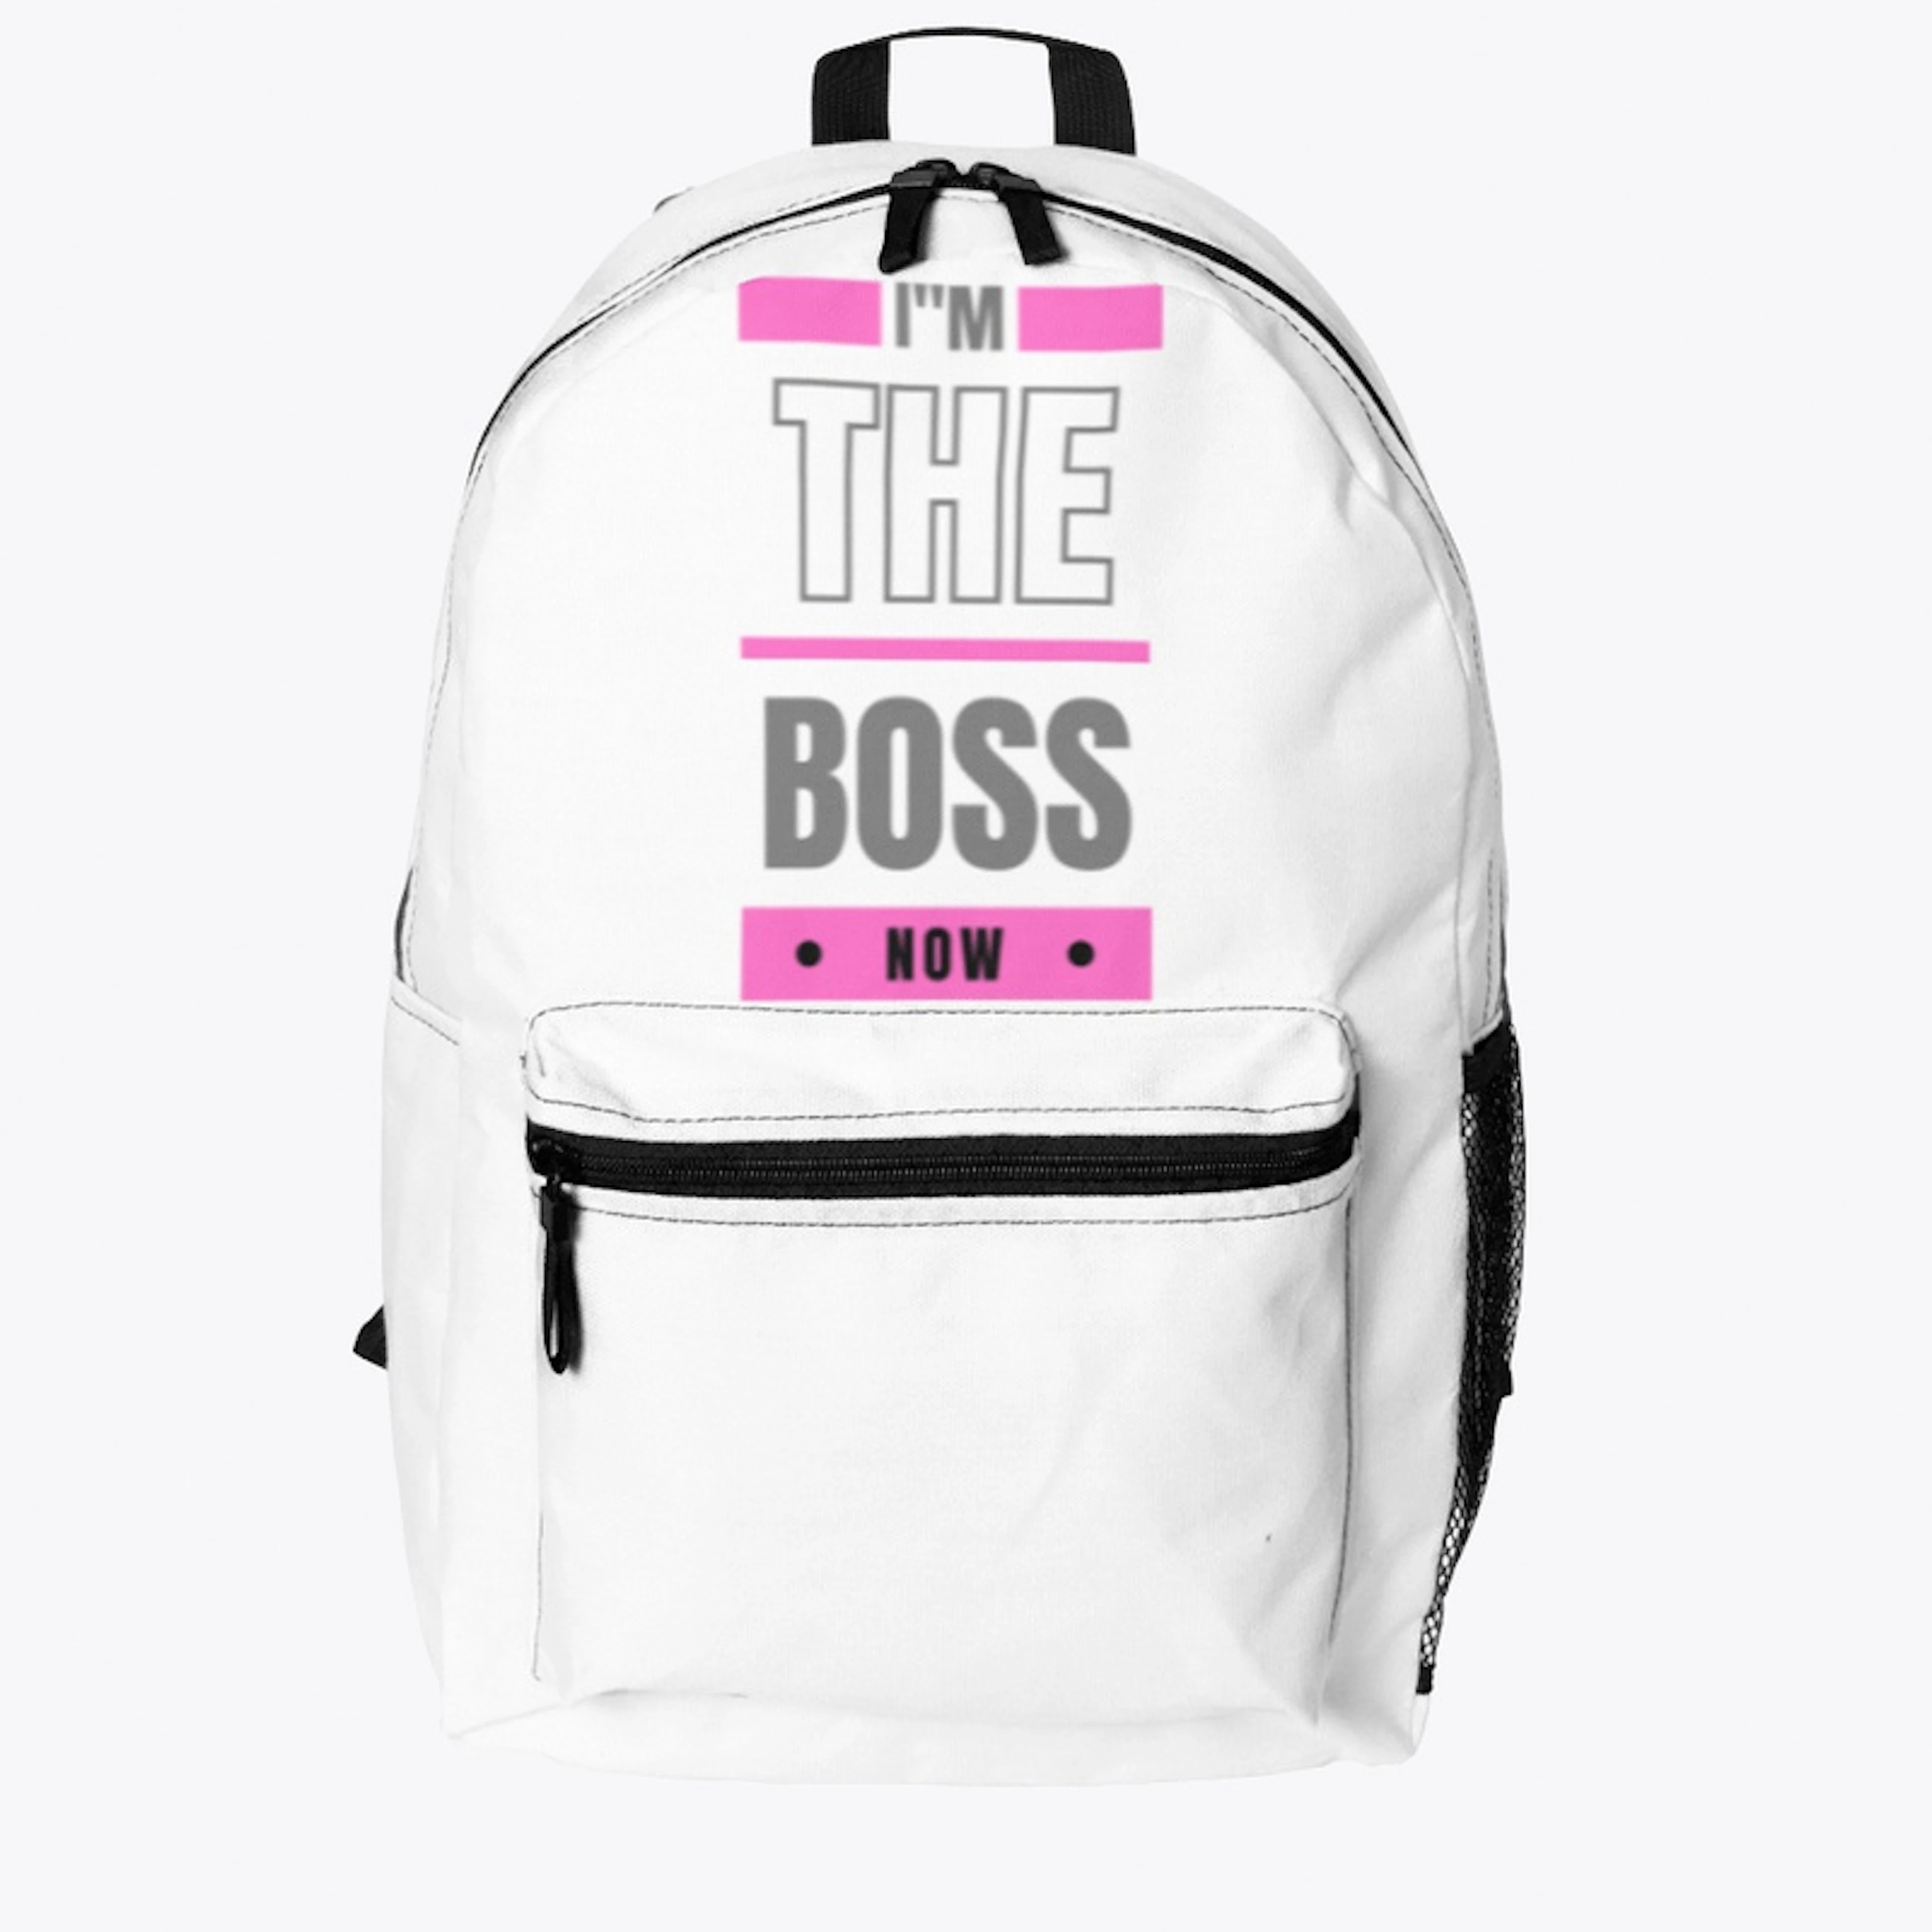 I'm the boss backpack